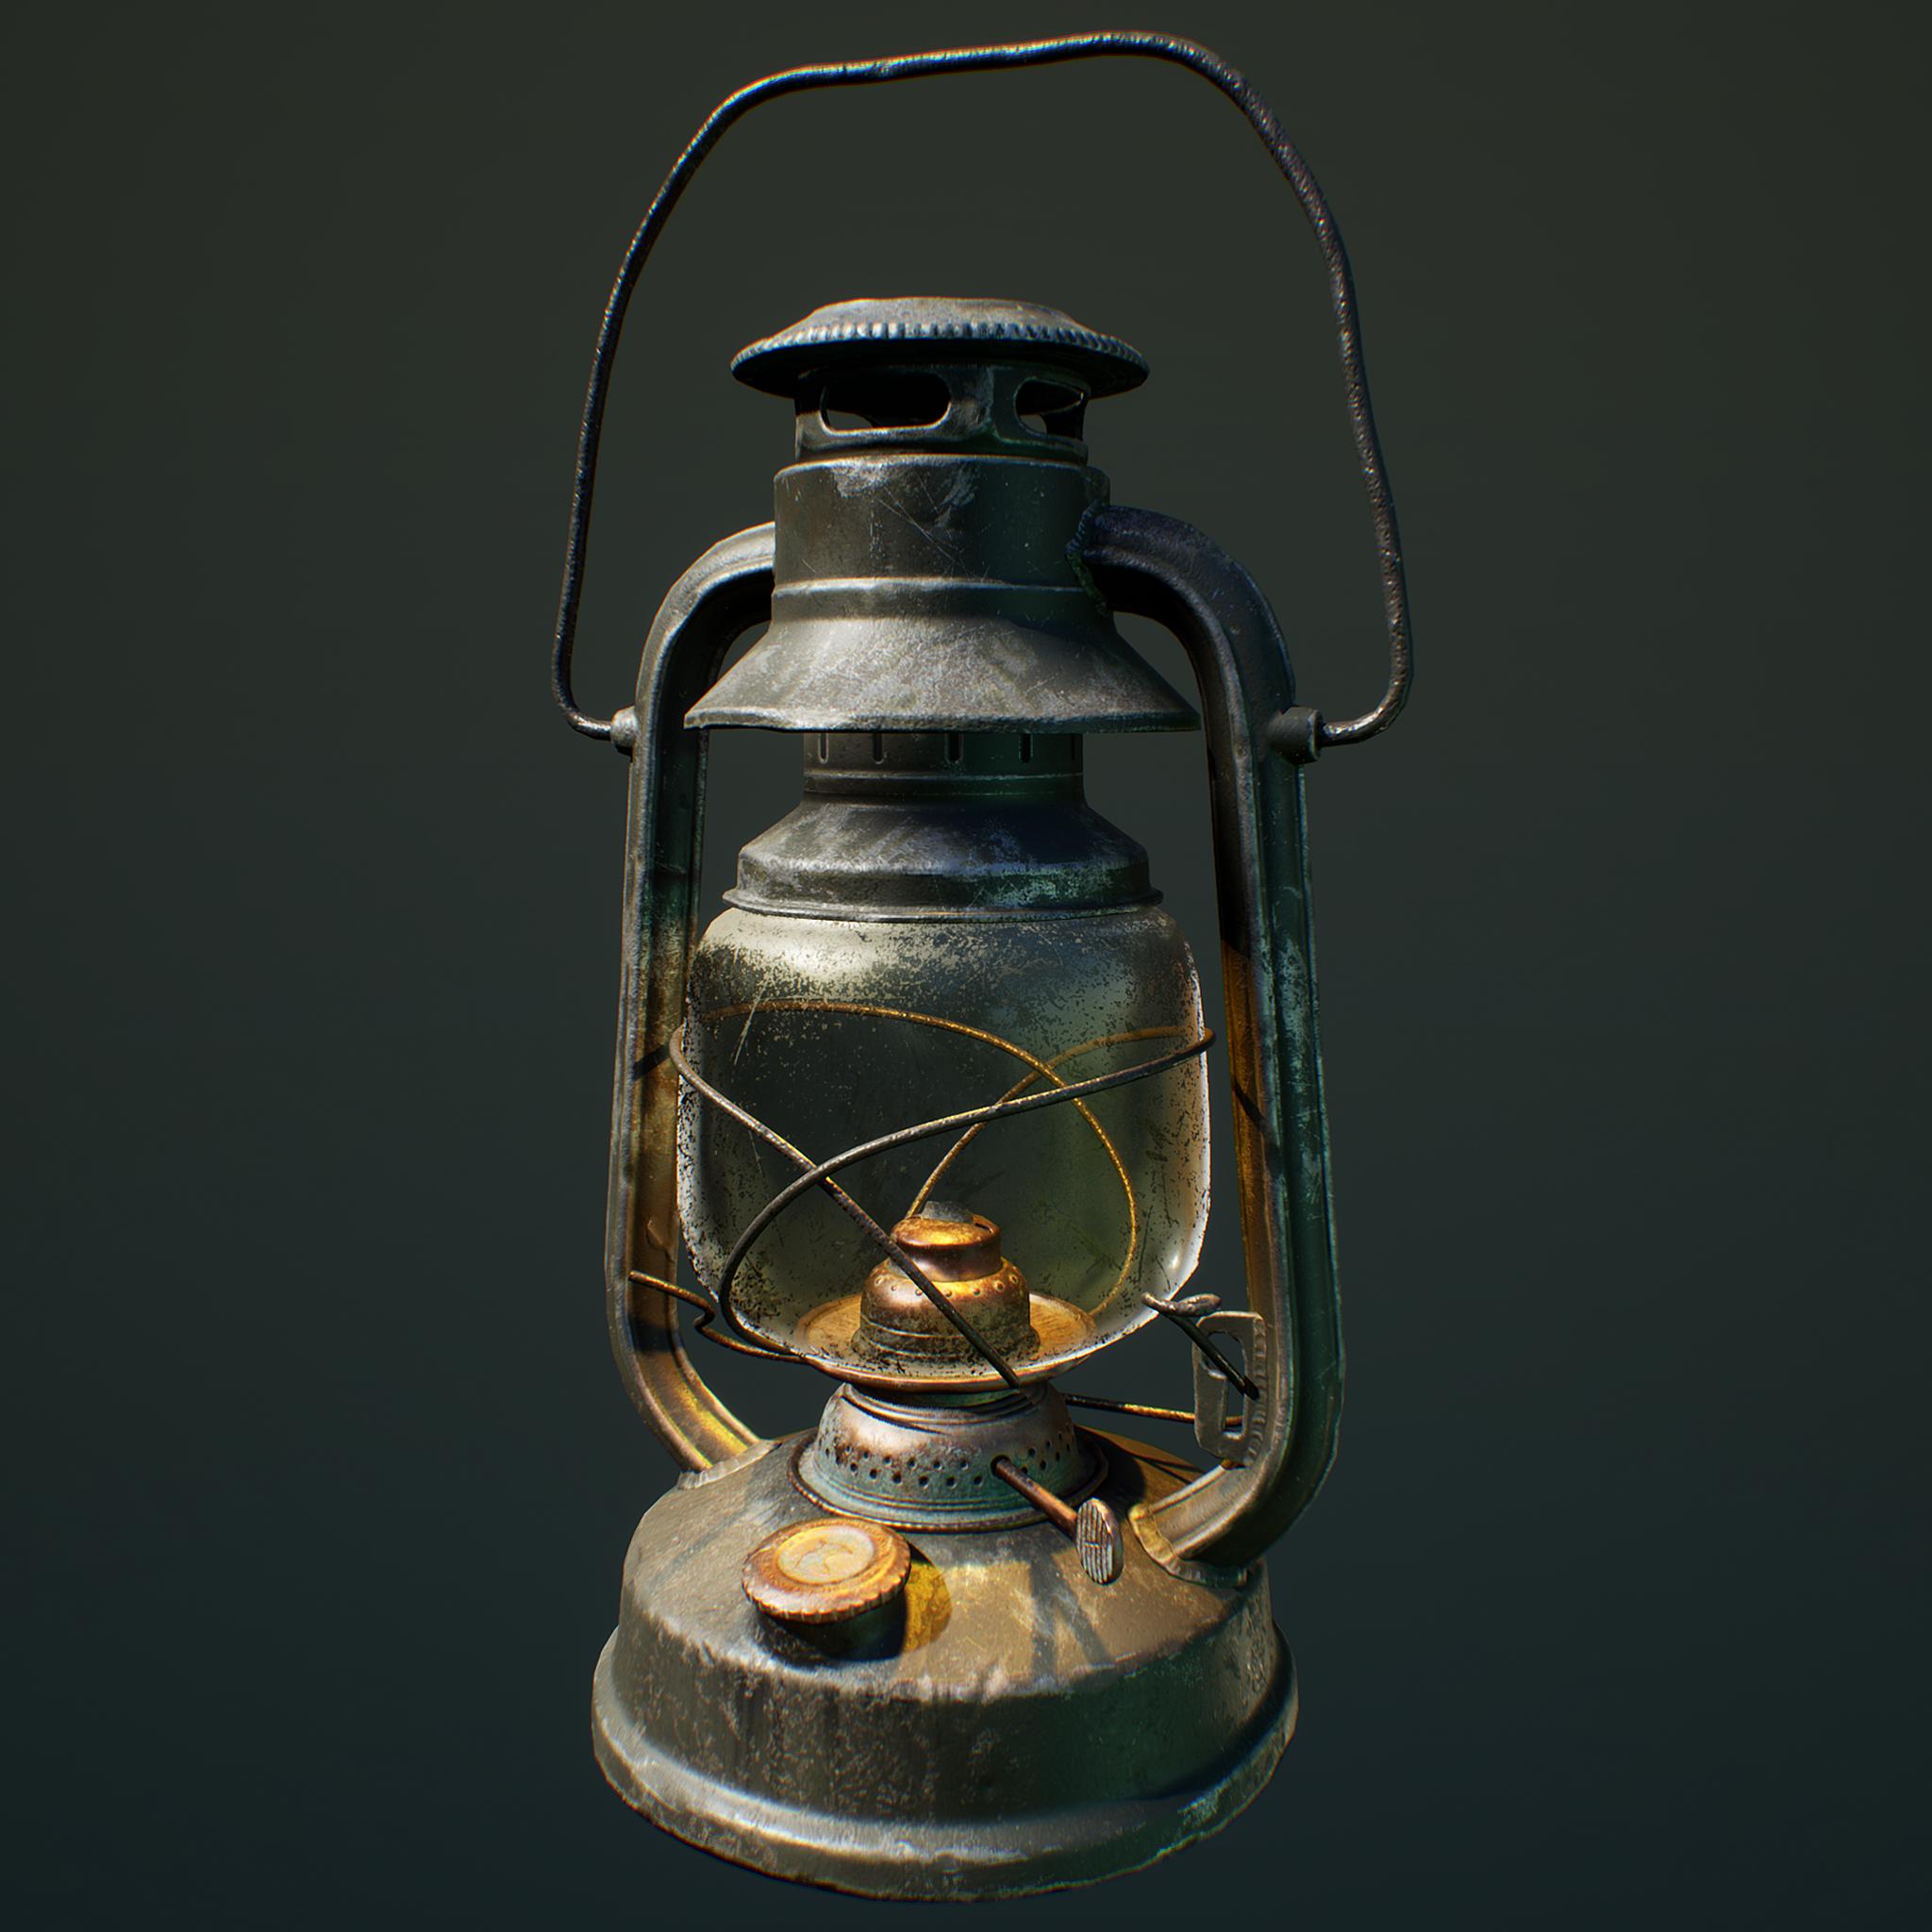 Render of an oil lamp